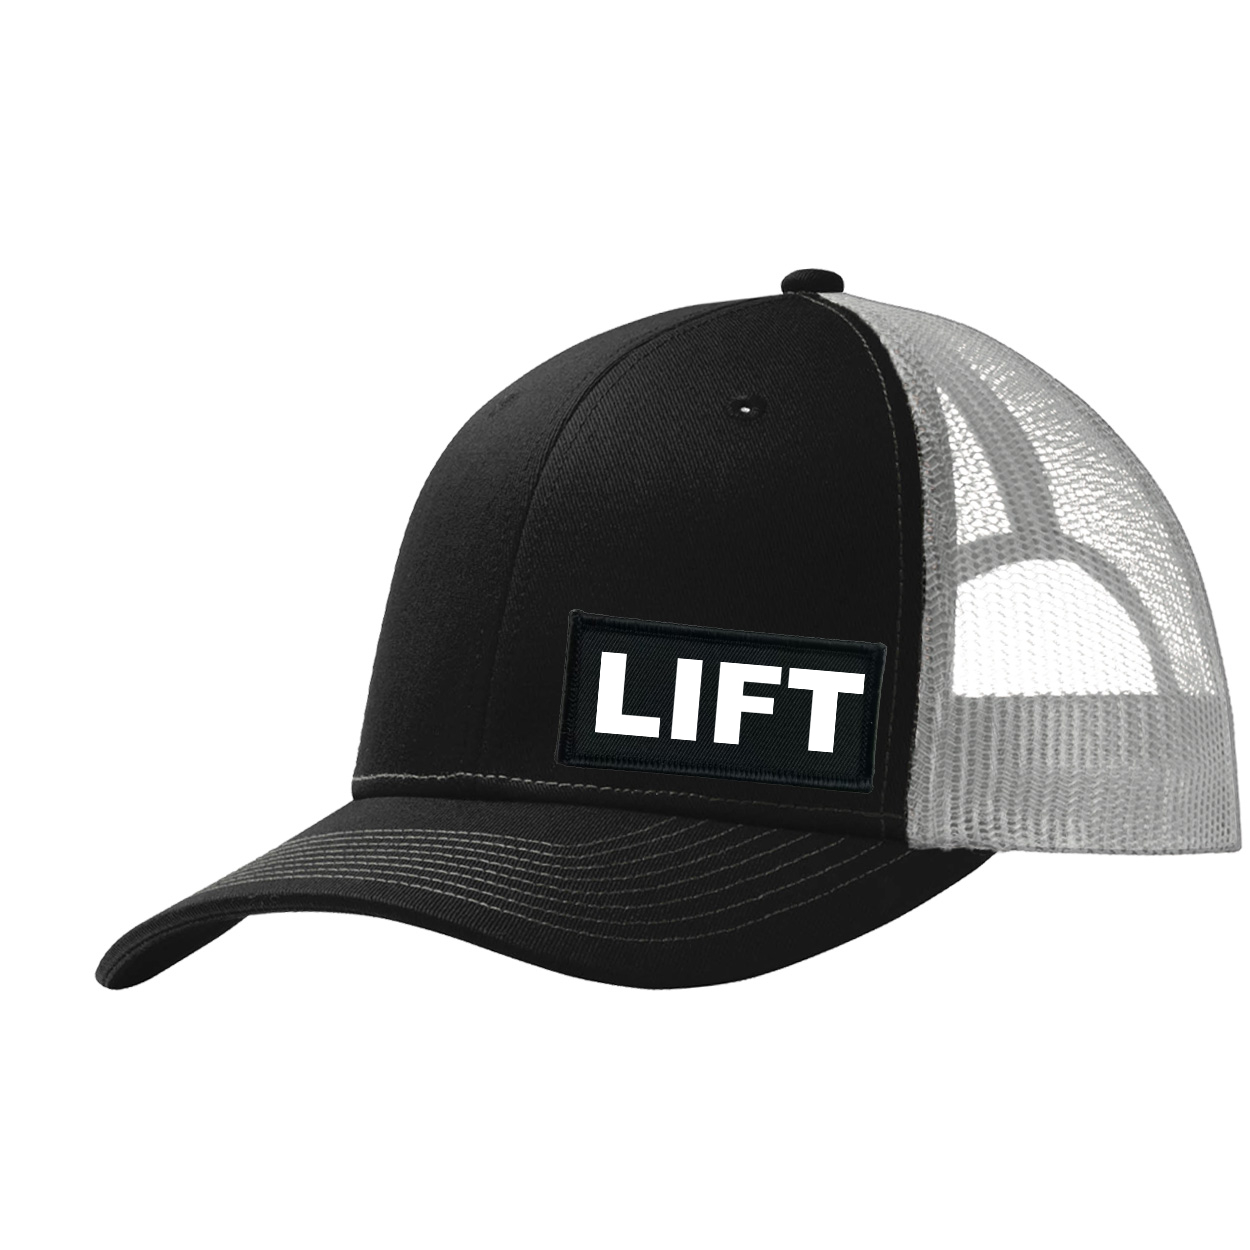 Lift Brand Logo Night Out Woven Patch Snapback Trucker Hat Black/Gray 